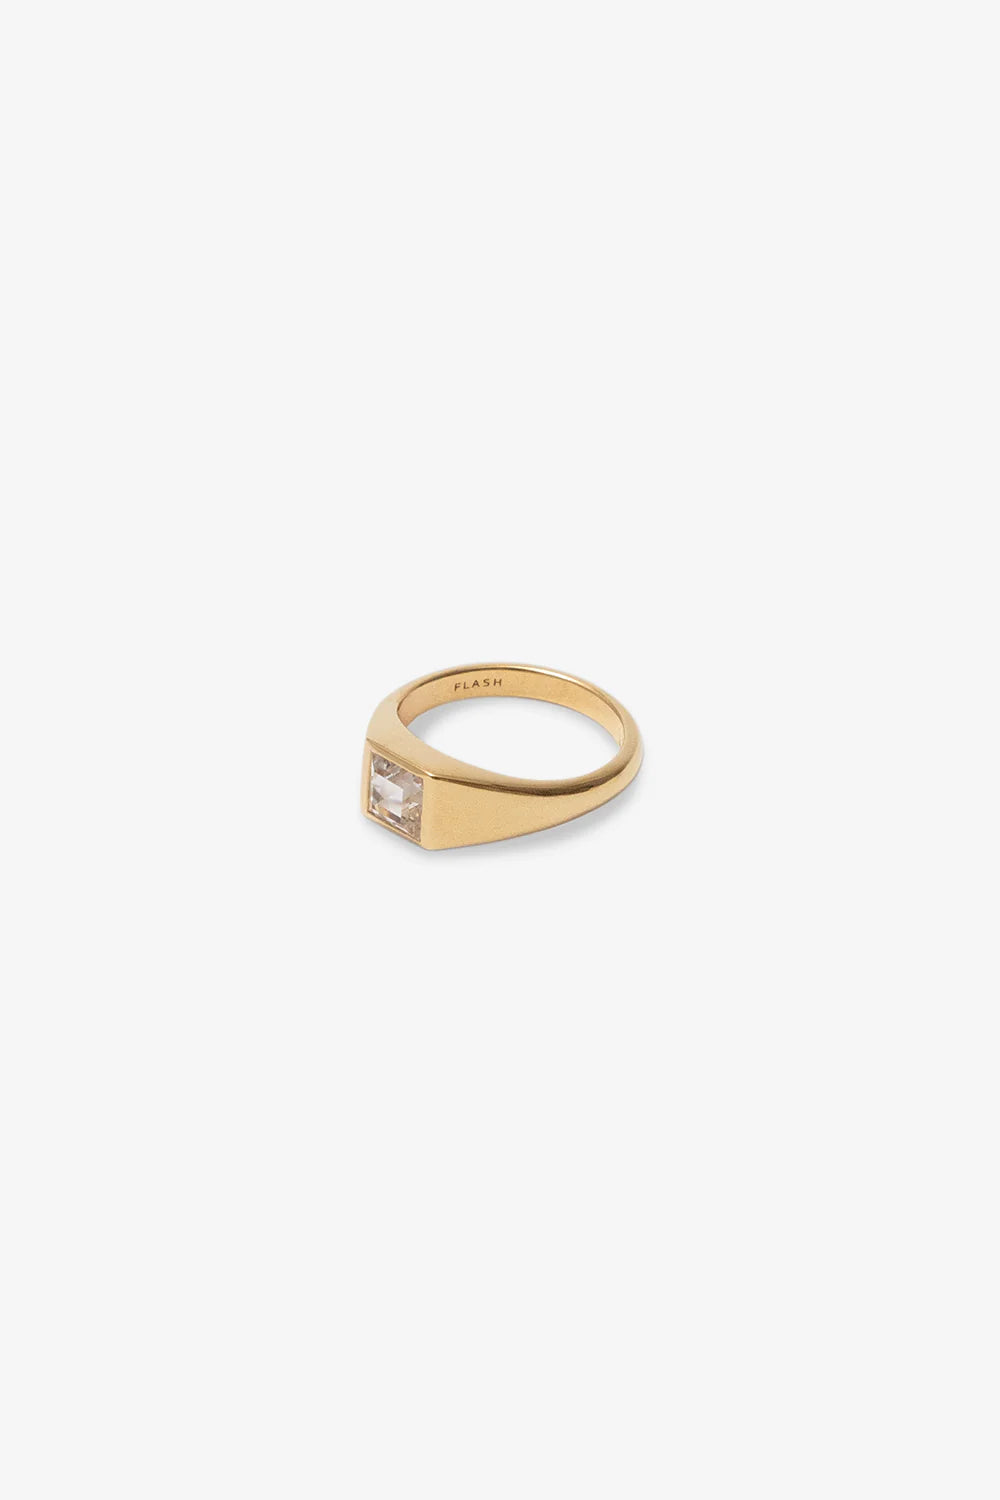 Flash Jewellery Pinky Gemstone Ring - Gold